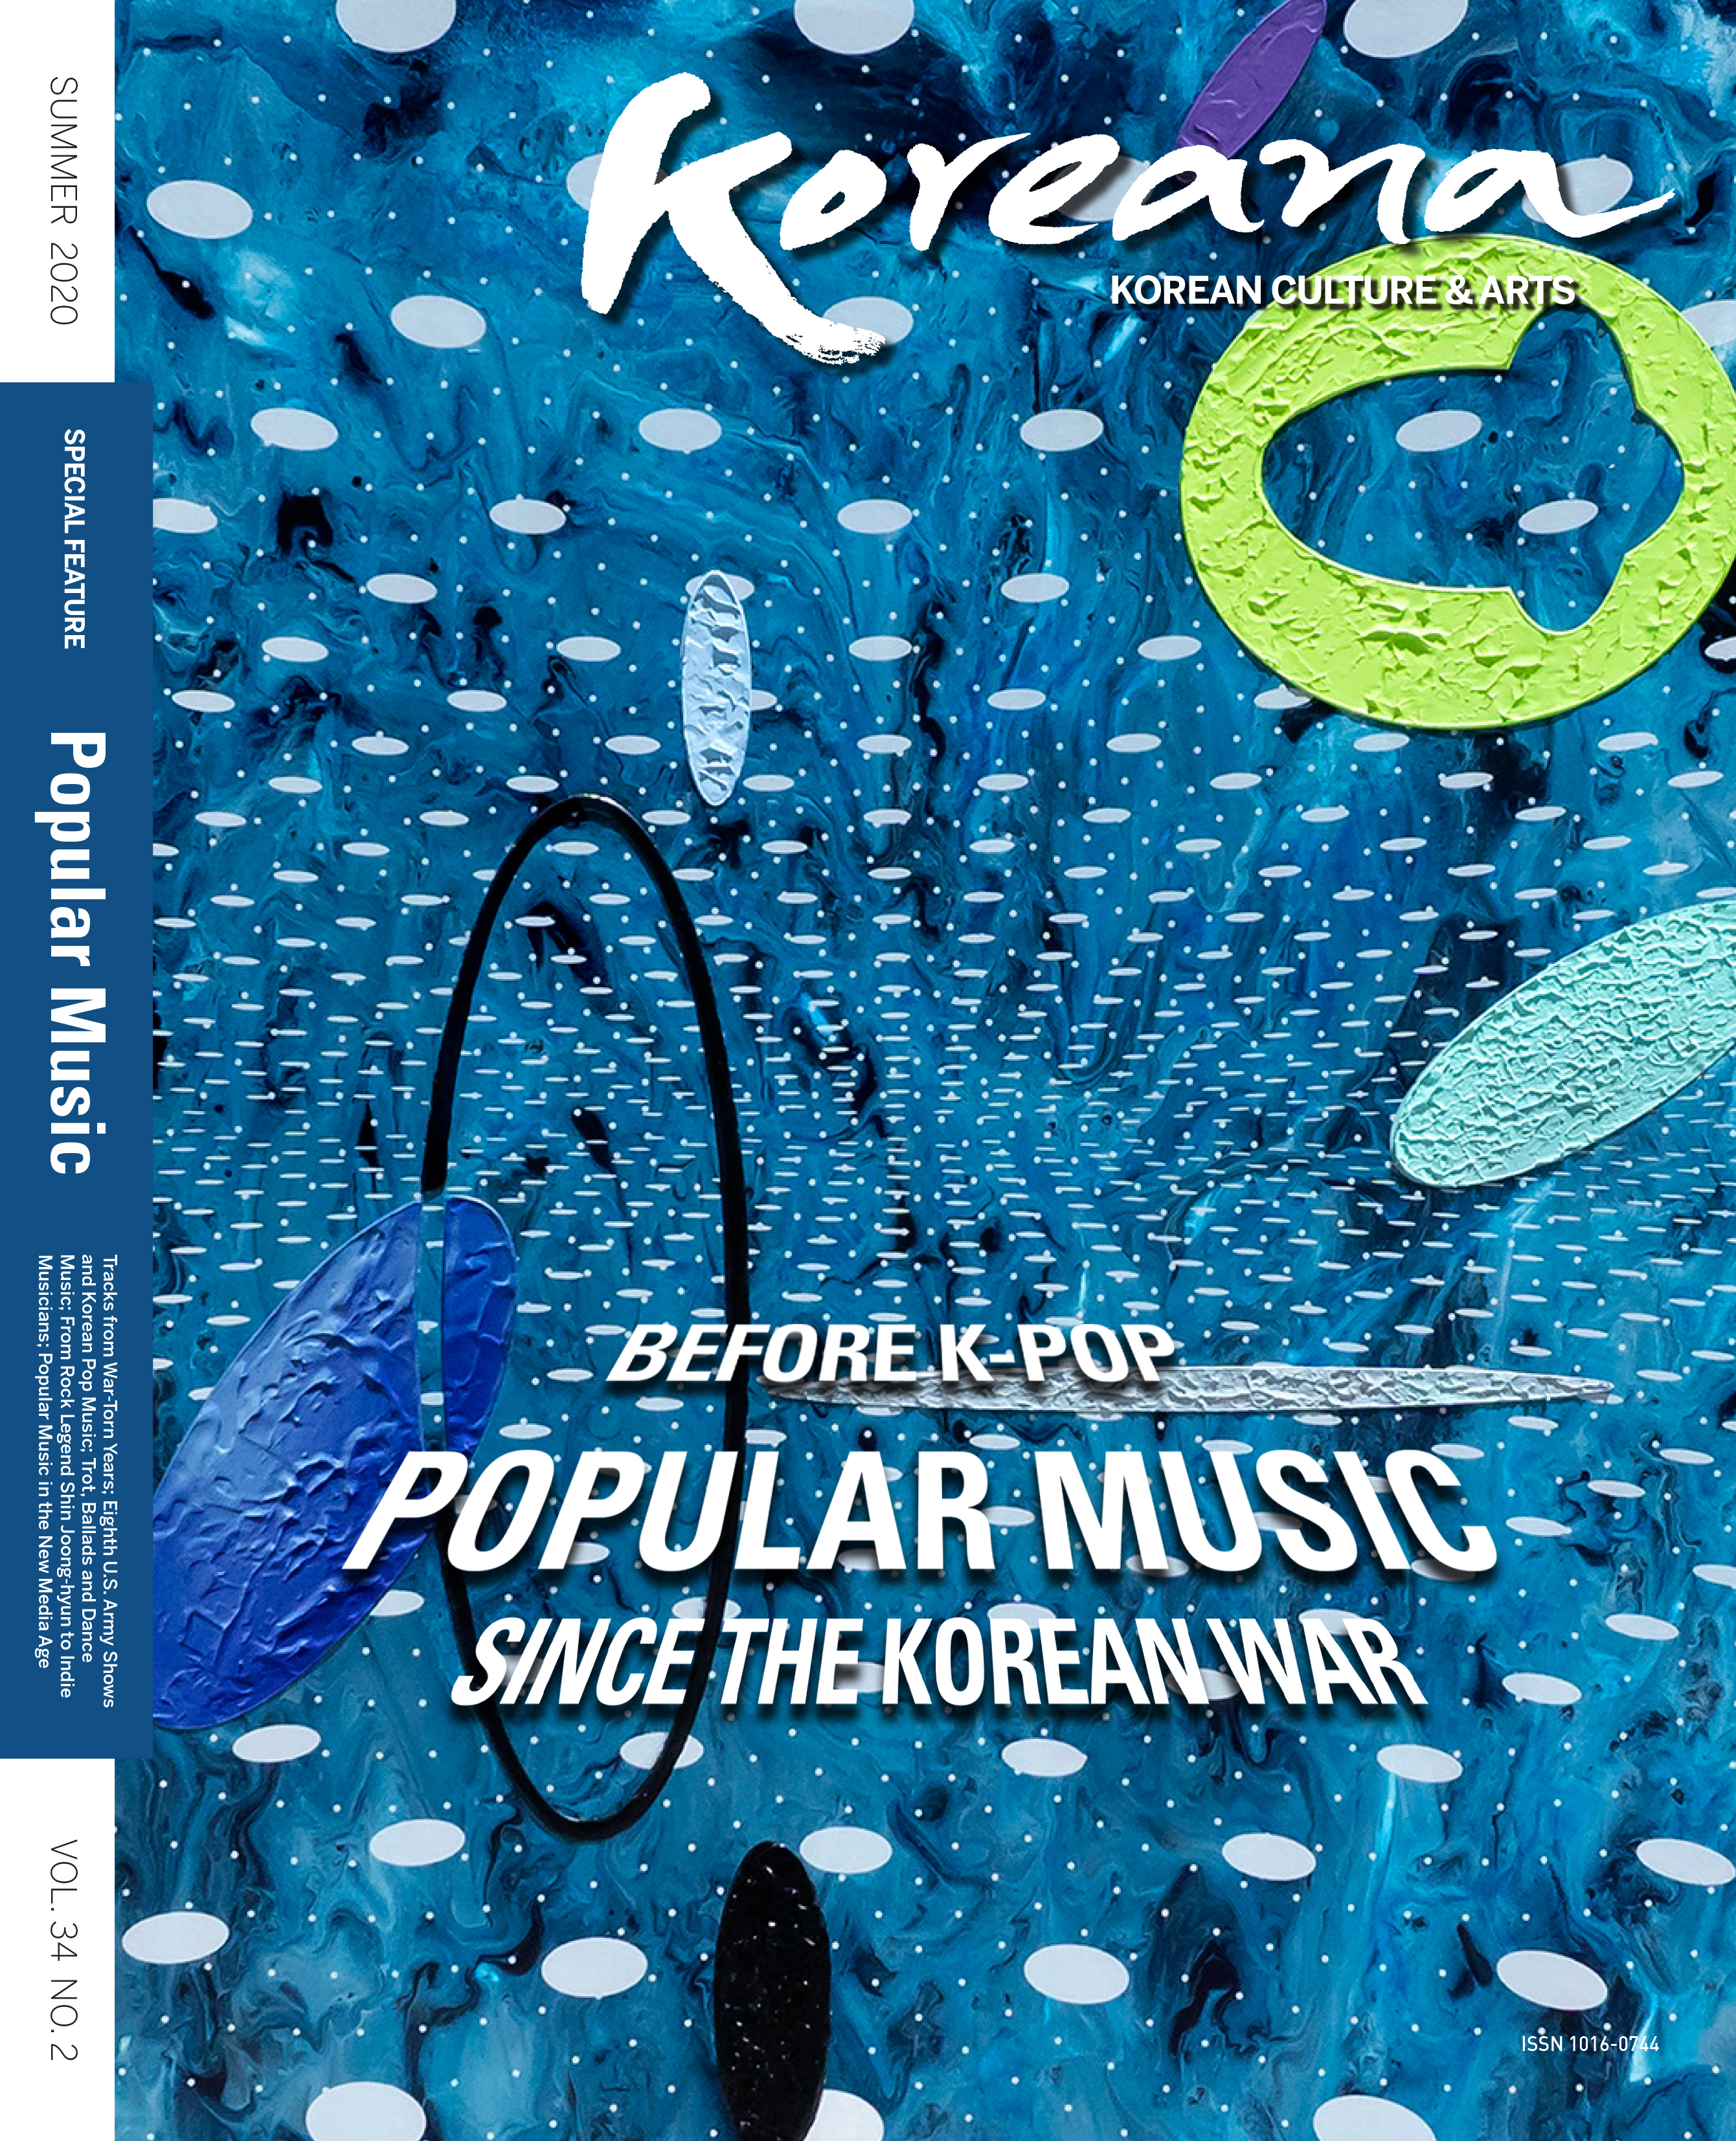 2020 <font color='red'>Summer</font> <font color='red'>Issue</font> of ‘Koreana' Published Before K-POP: Popular Music since the Korean War